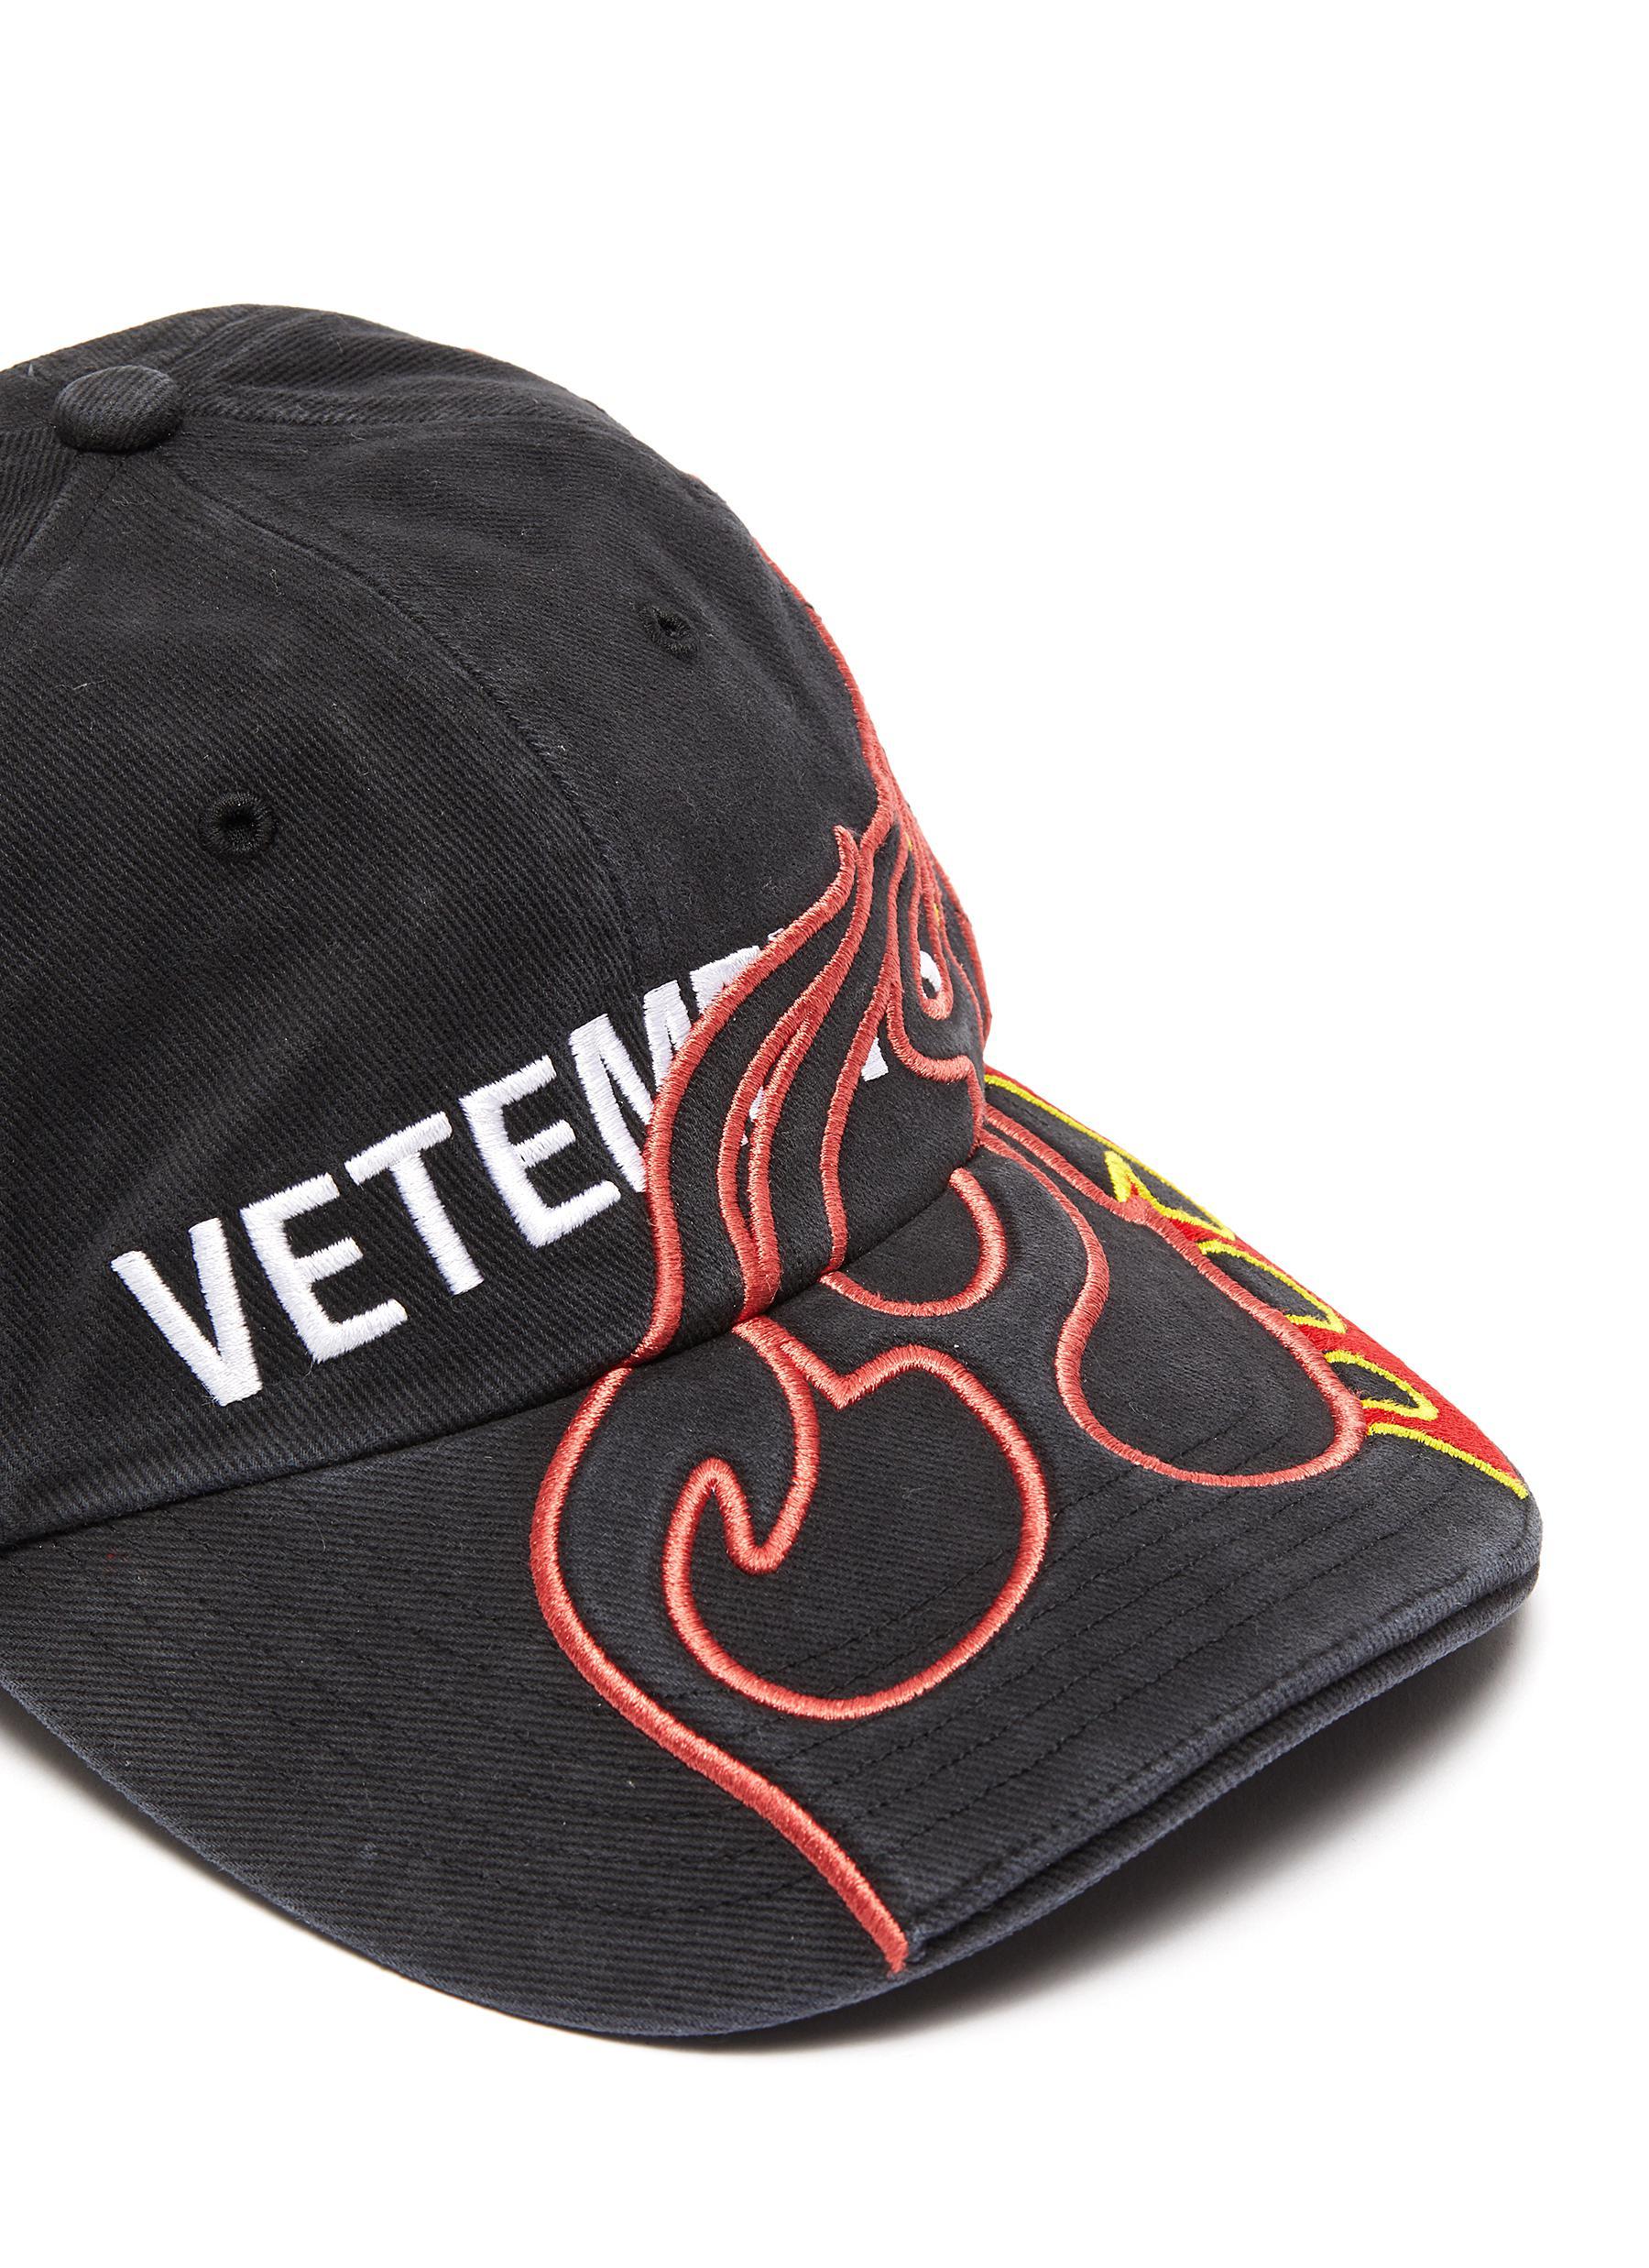 Vetements X Reebok Graphic Logo Embroidered Baseball Cap for Men | Lyst